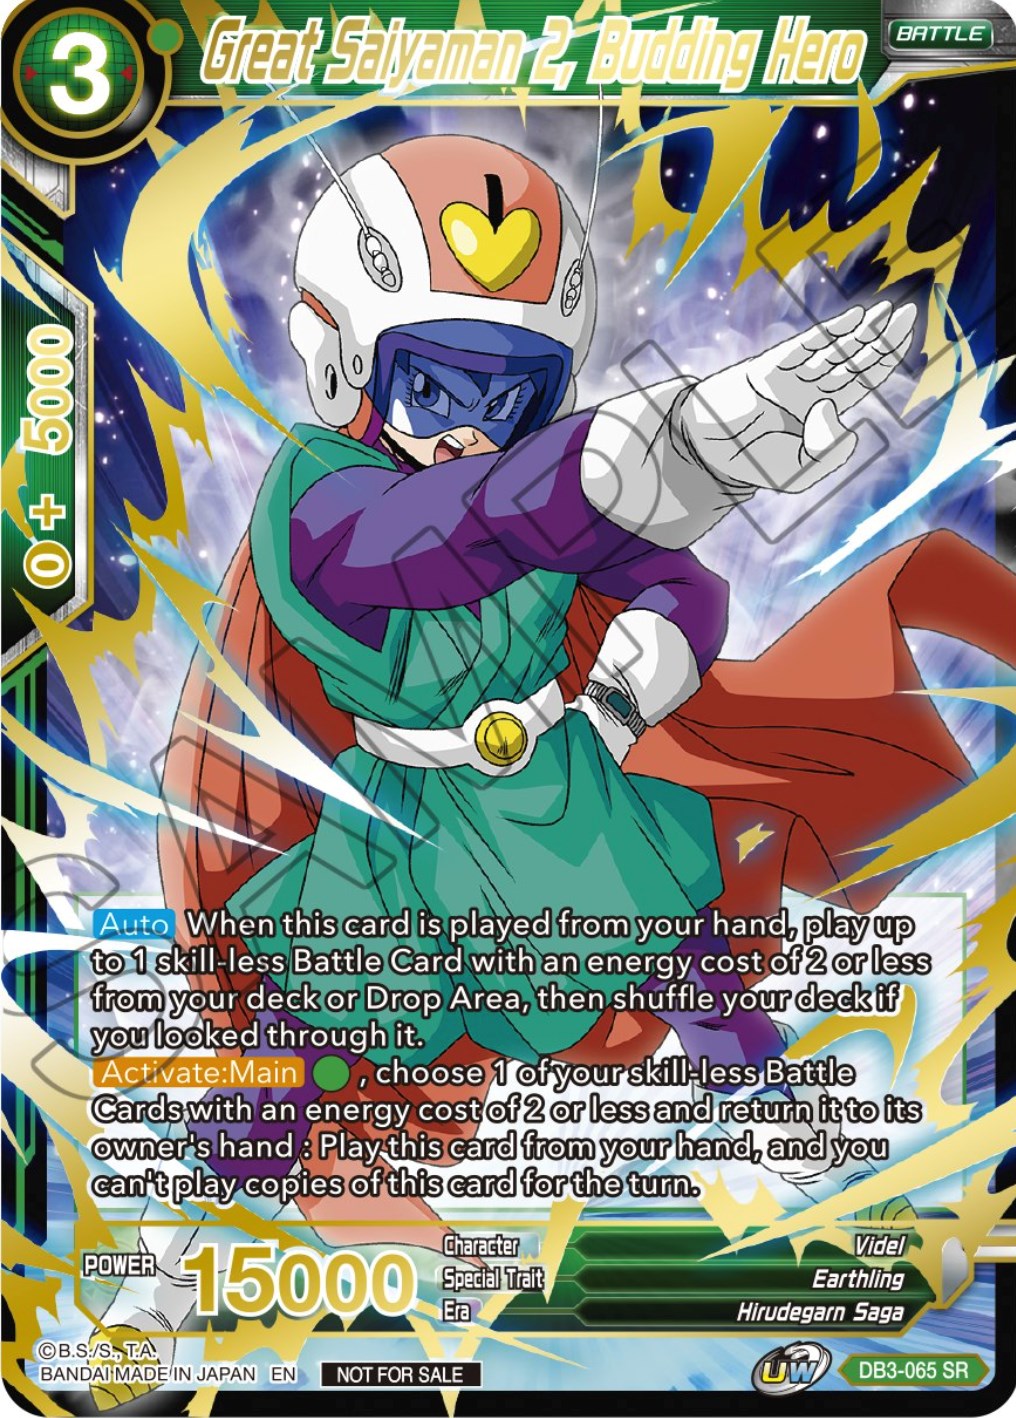 Great Saiyaman 2, Budding Hero (DB3-065) [Tournament Promotion Cards] | Rock City Comics